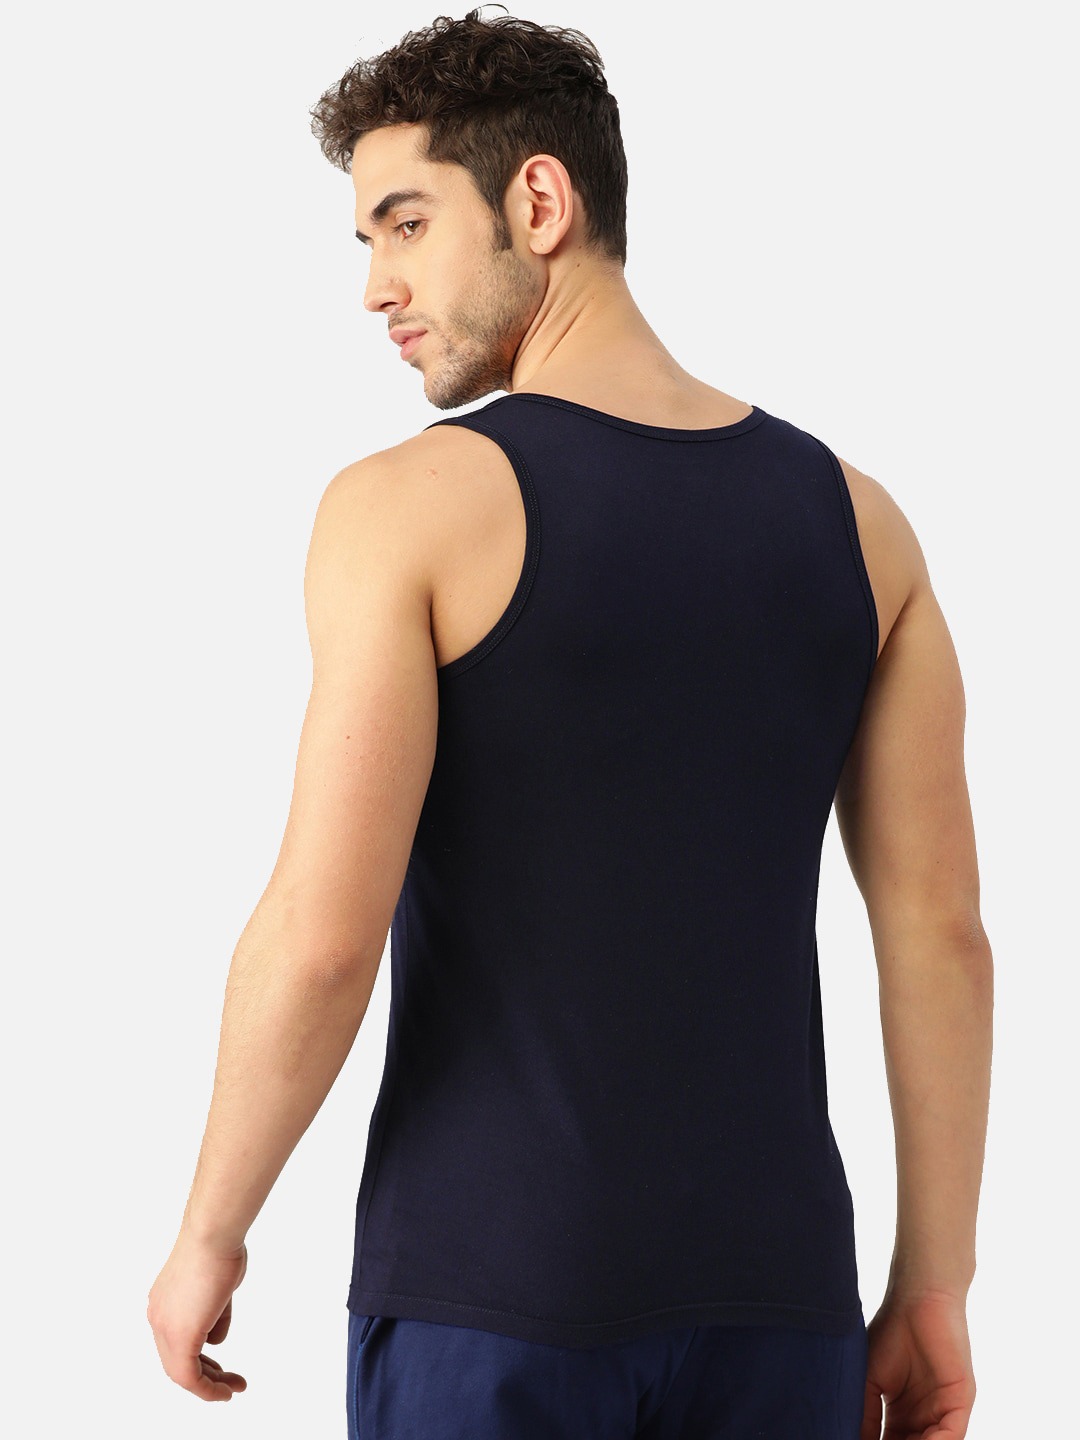 Clothing Innerwear Vests | ROMEO ROSSI Pack of 3 Navy Blue Round Neck Innerwear Vests - XG15242